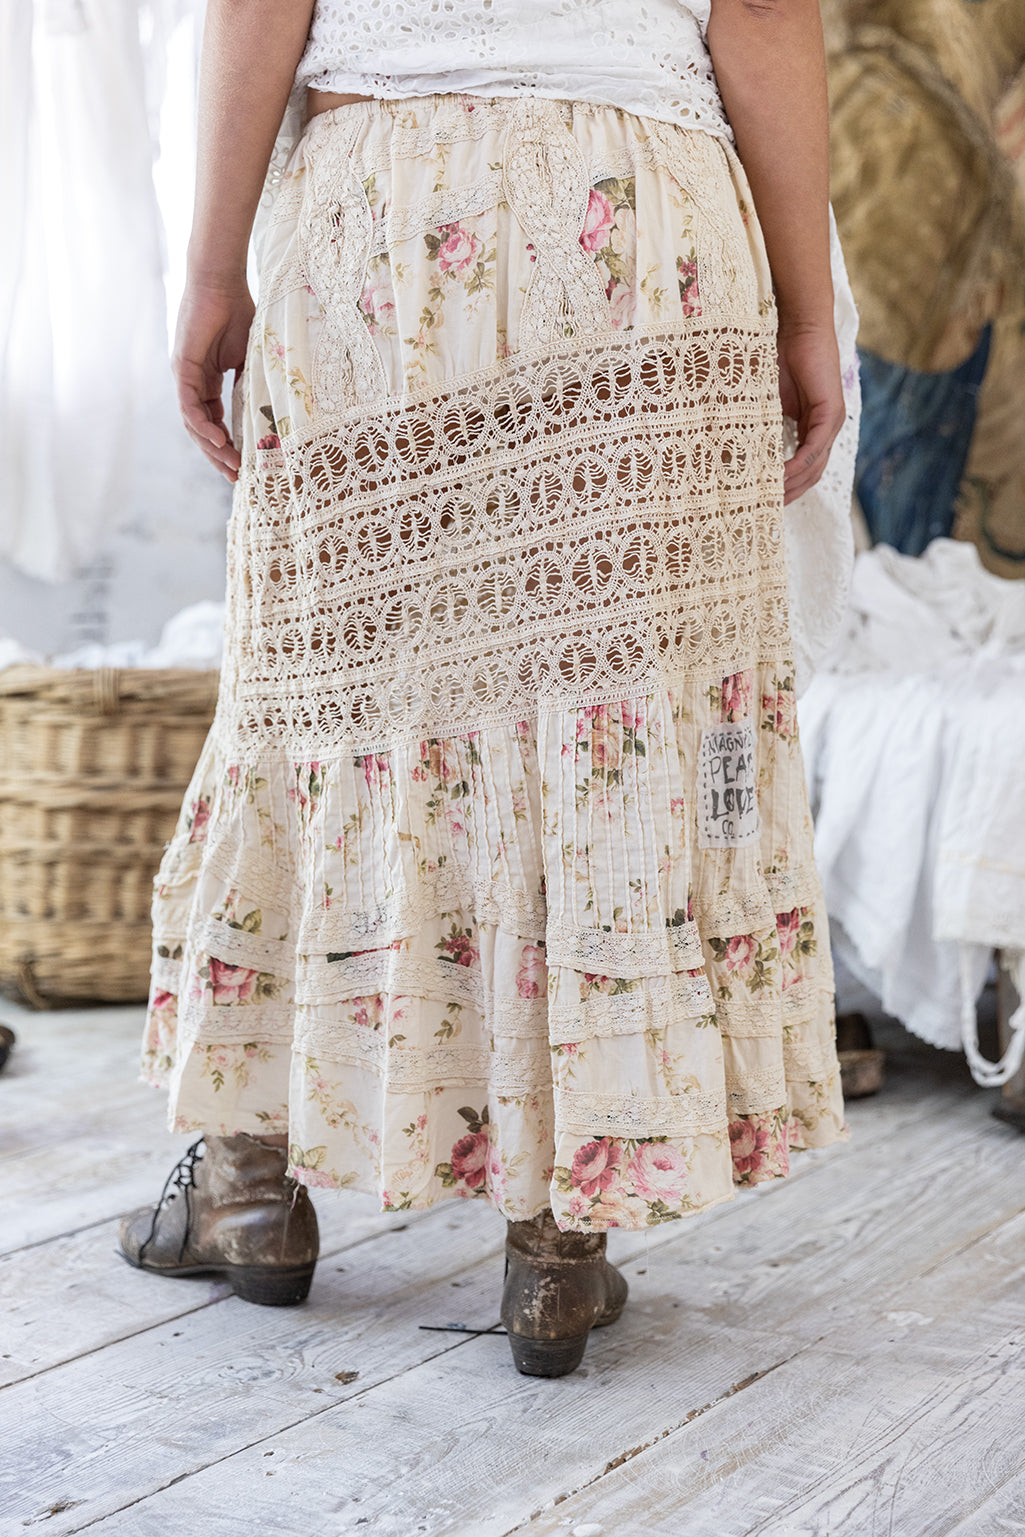 Floral Ada Lovelace Skirt